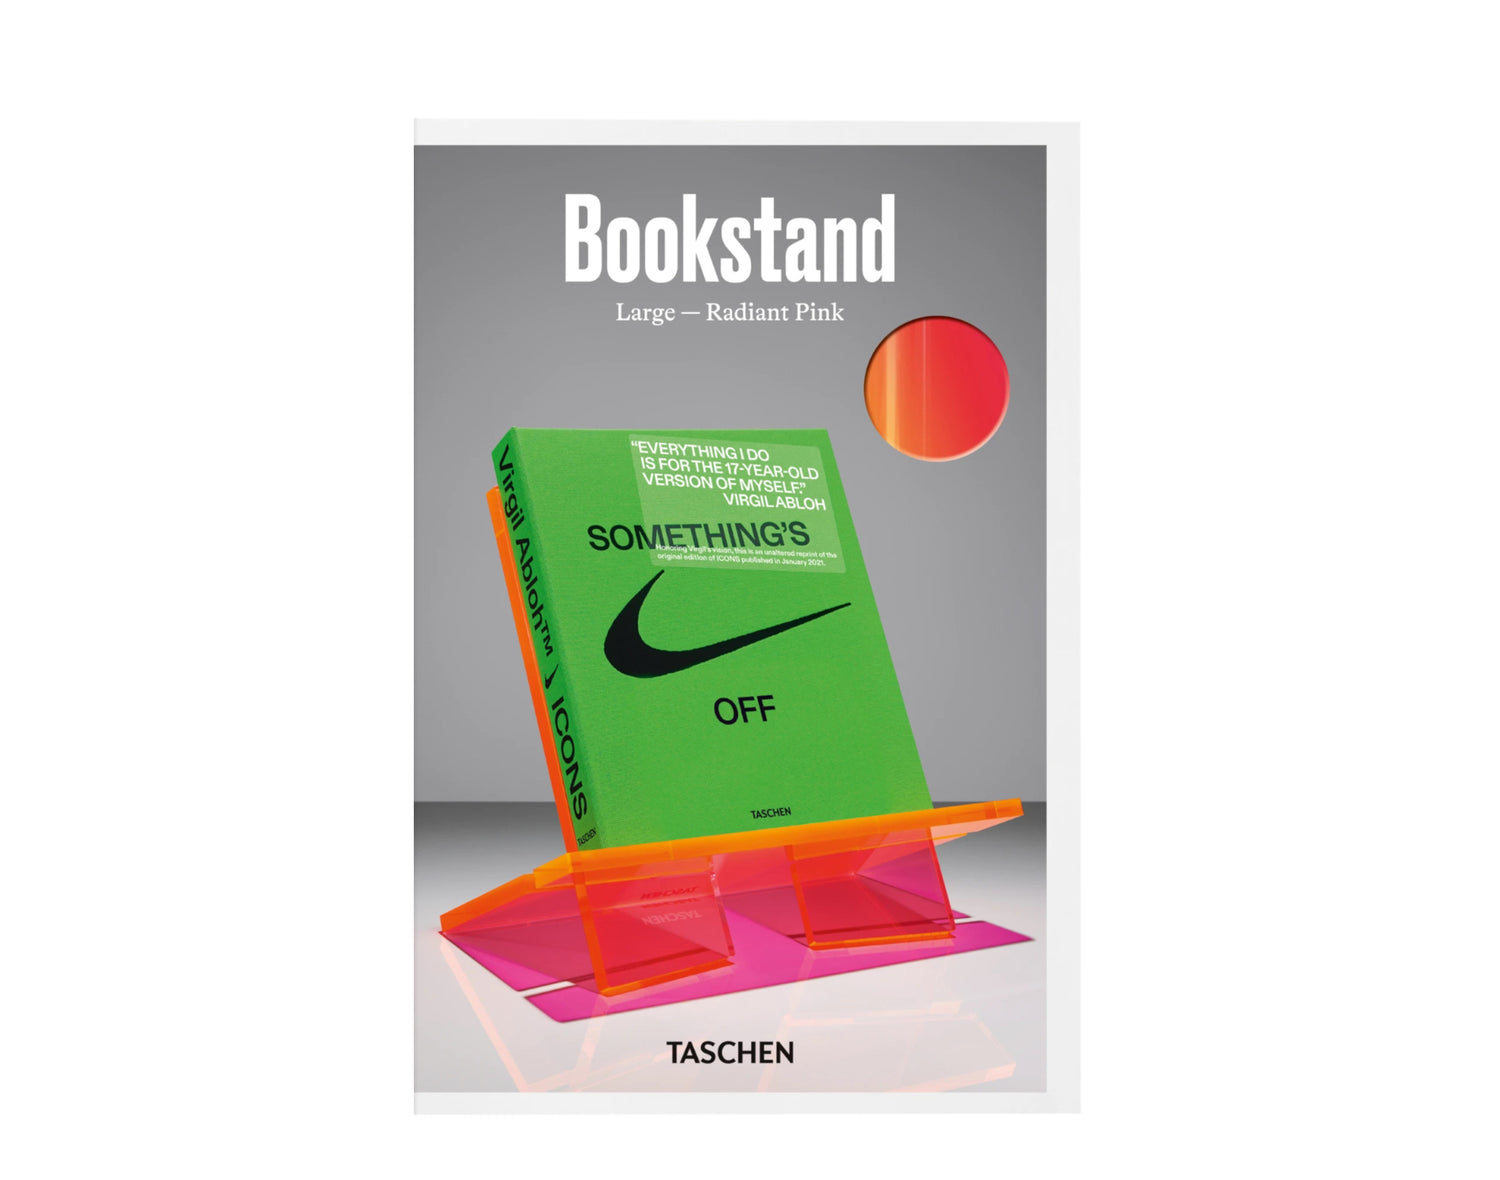 Taschen Books - Bookstand. Large. Radiant Pink - Display Holder